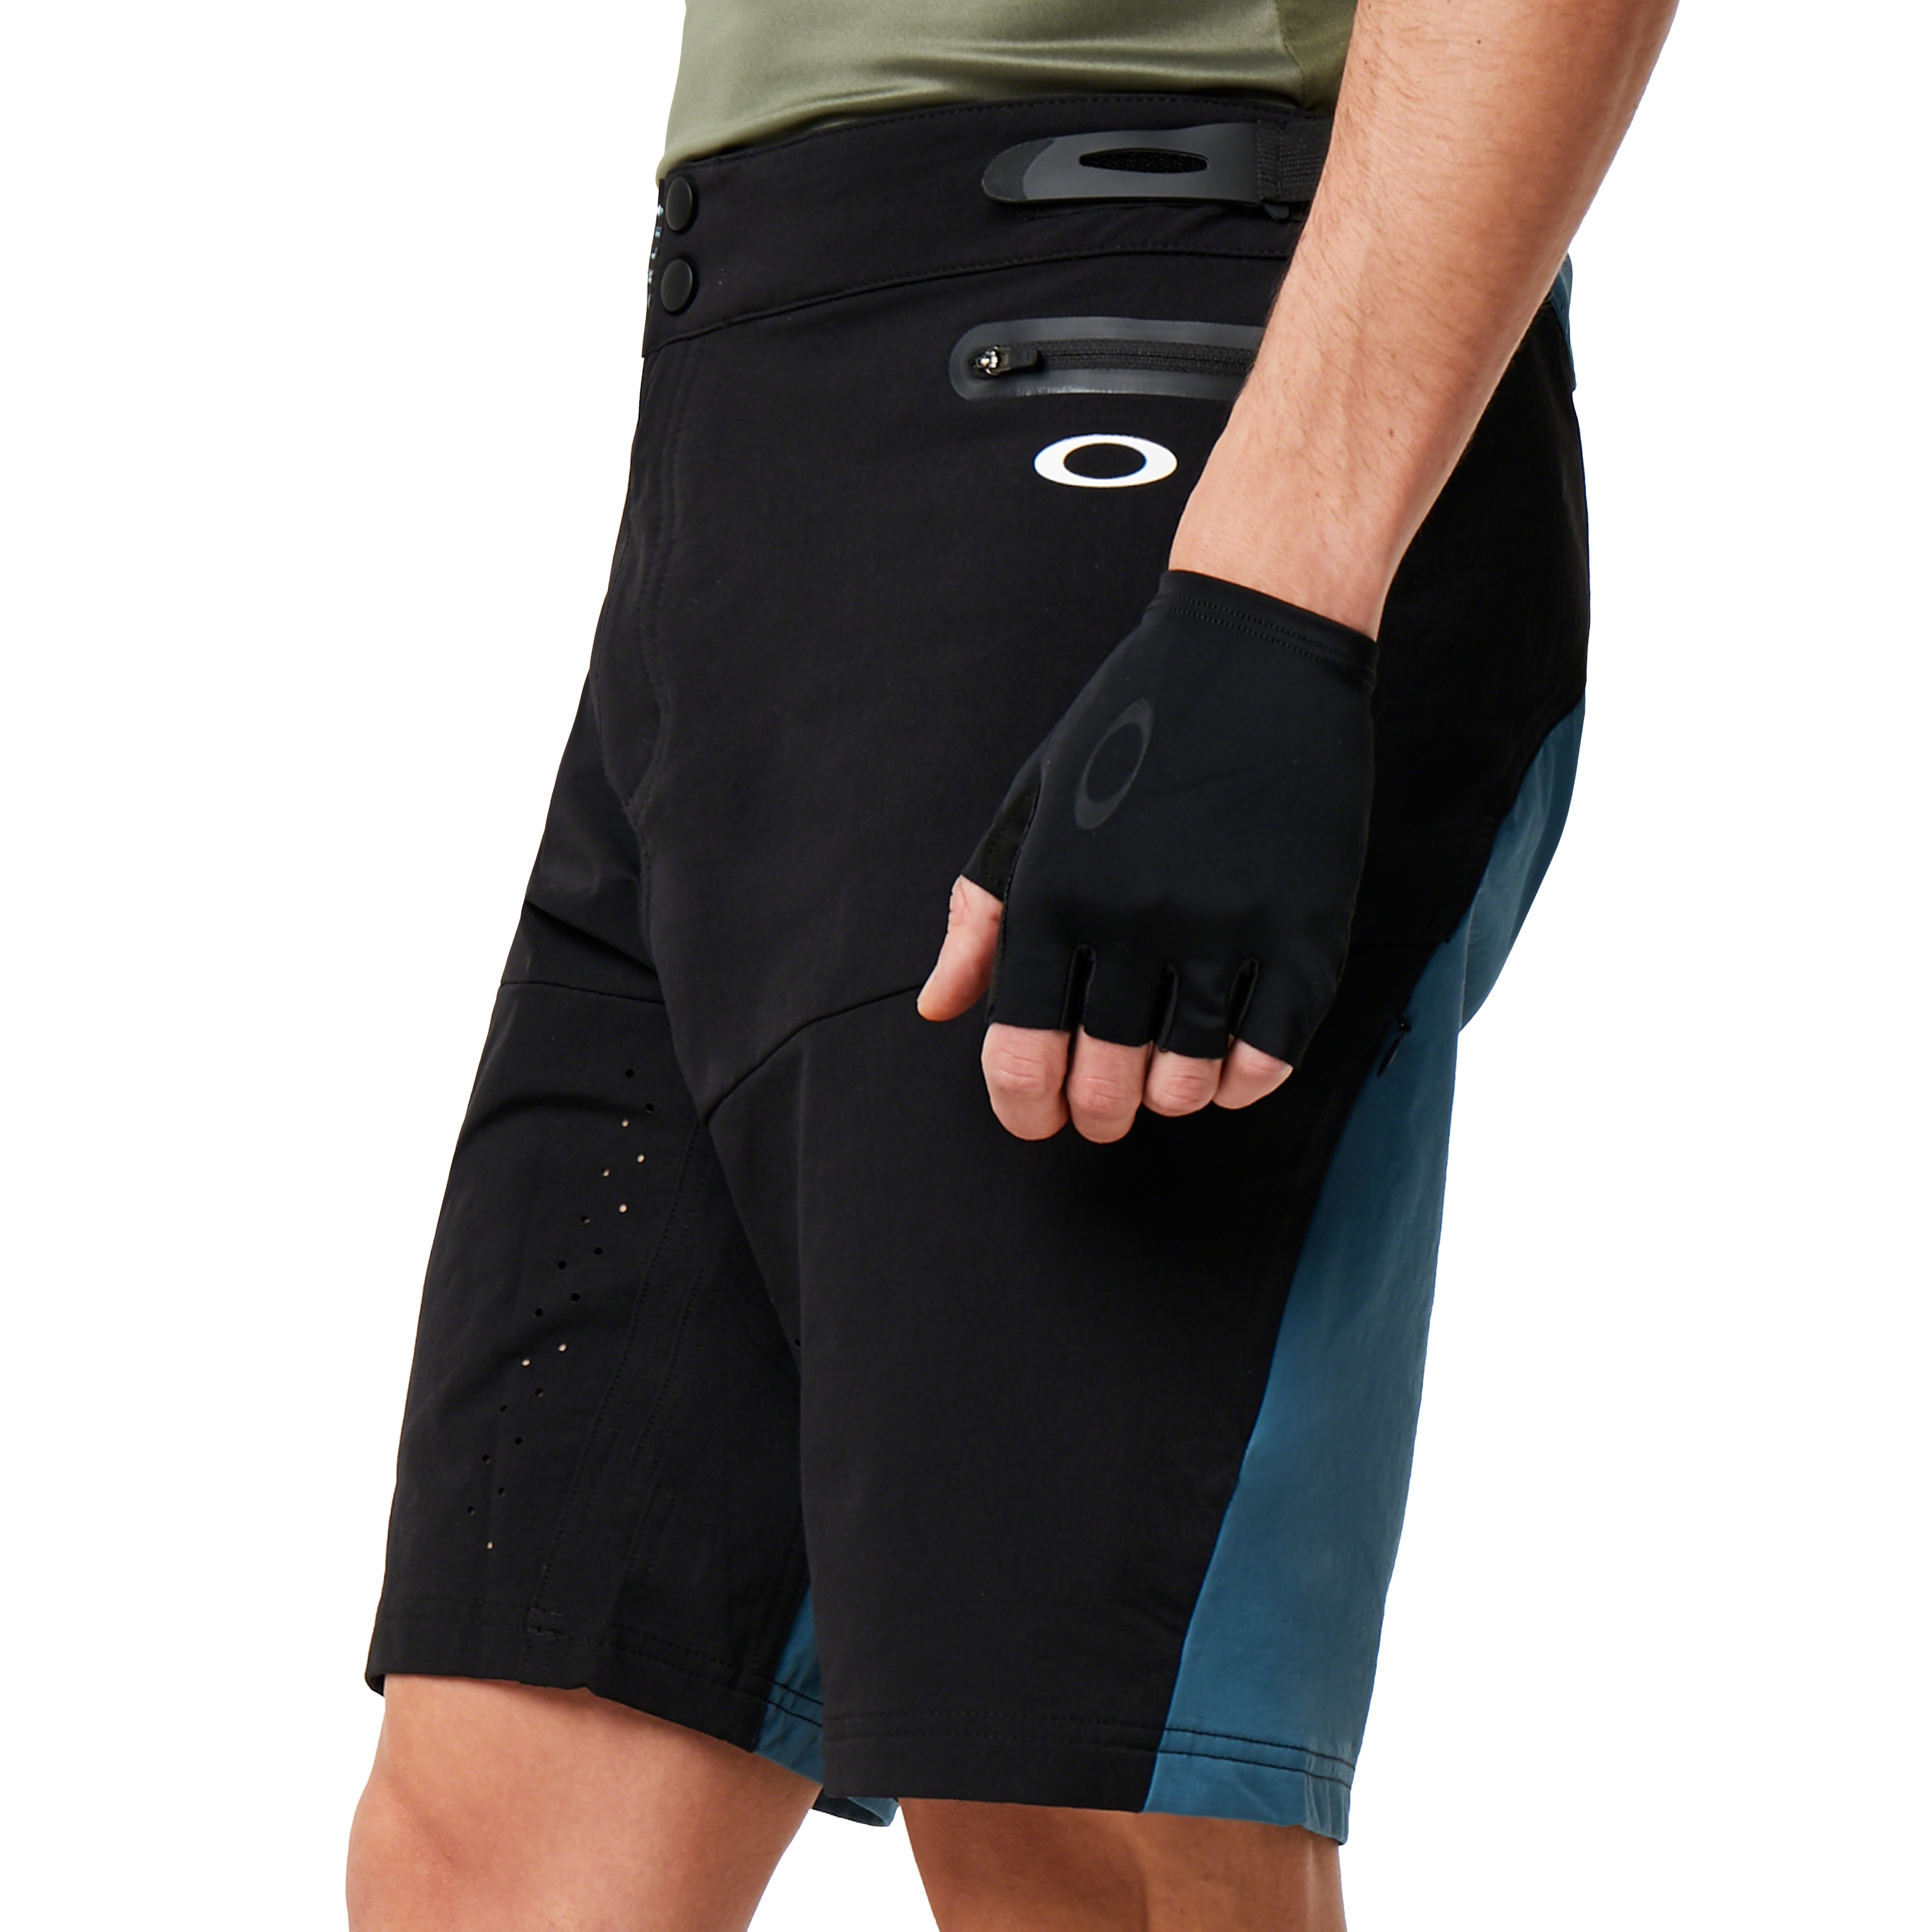 oakley cycling shorts